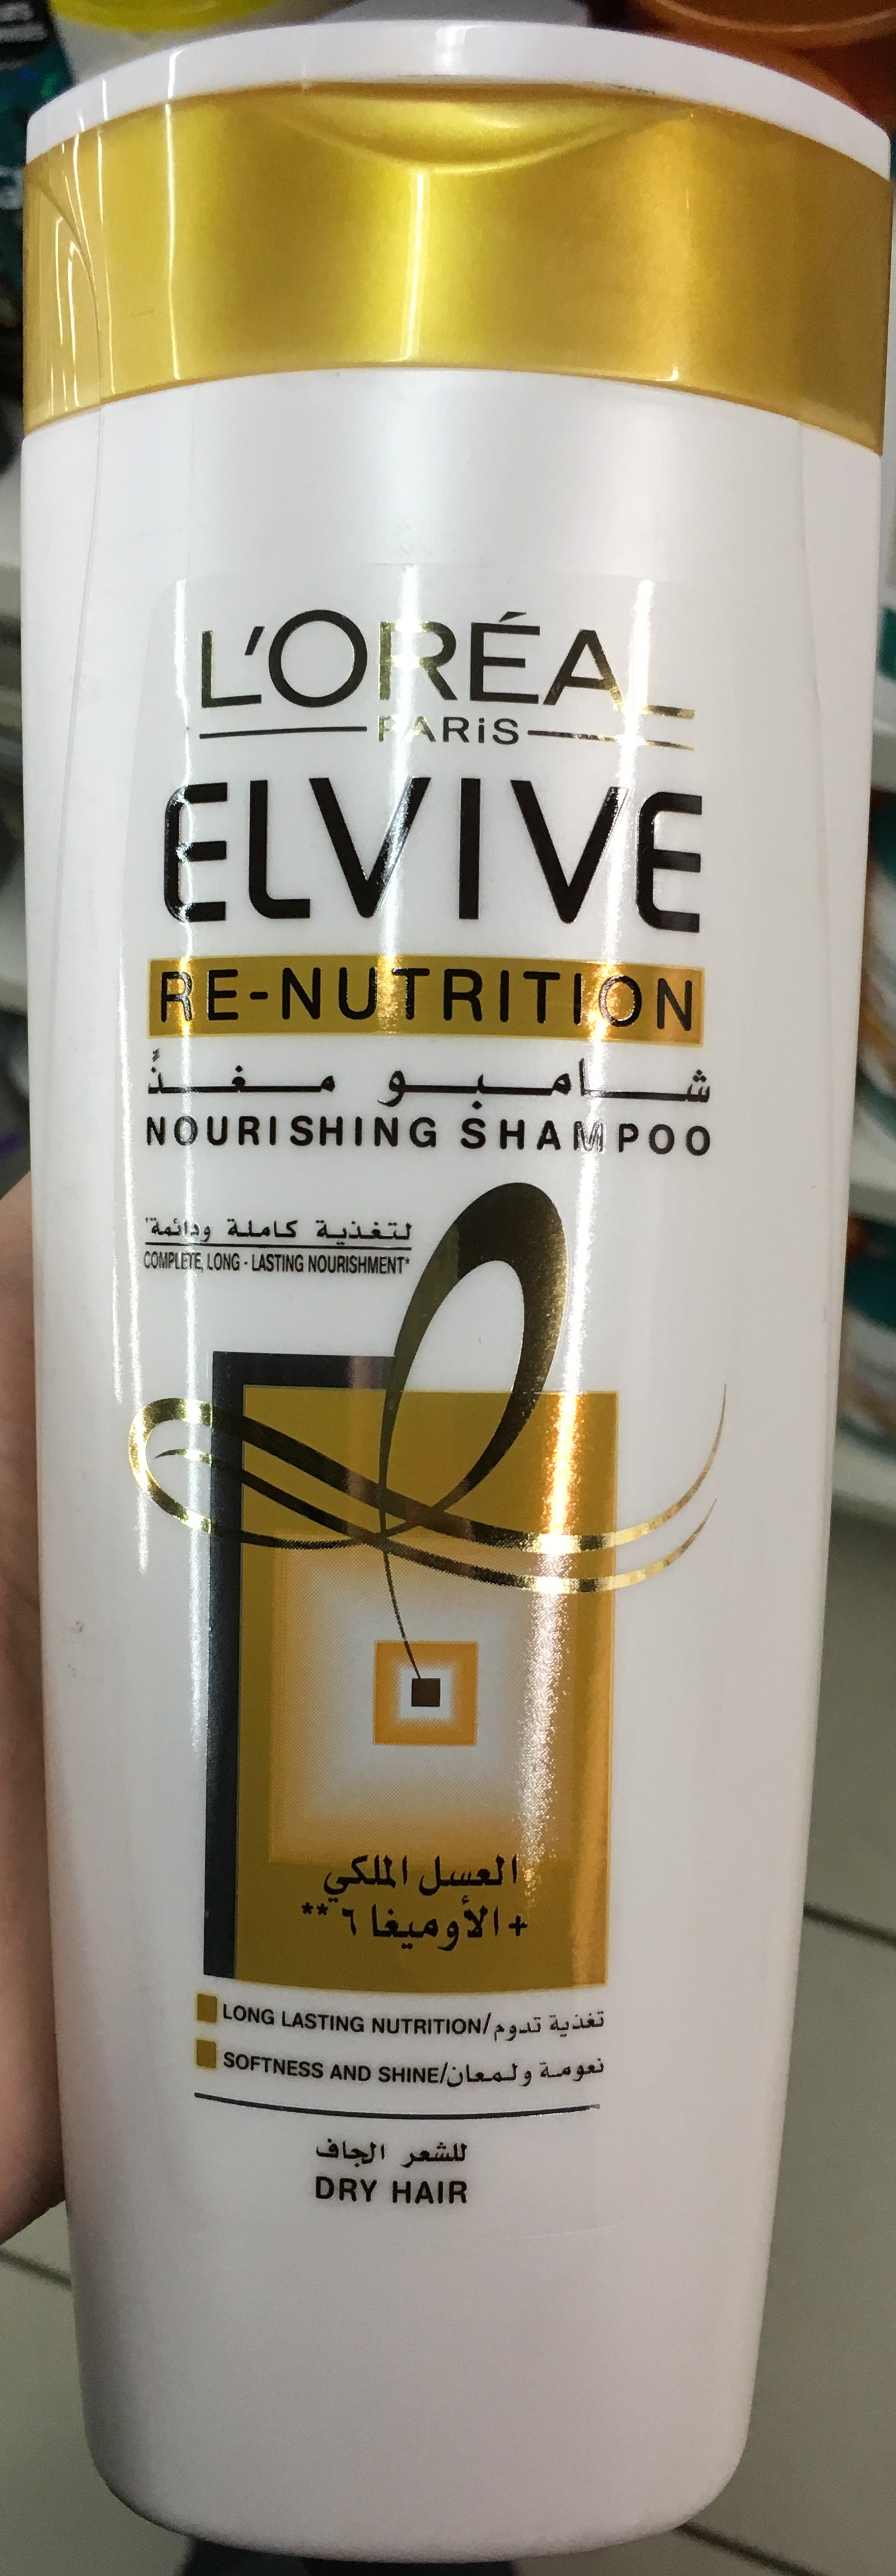 Elvive Re-Nutrition Nourishing Shampoo - Product - en